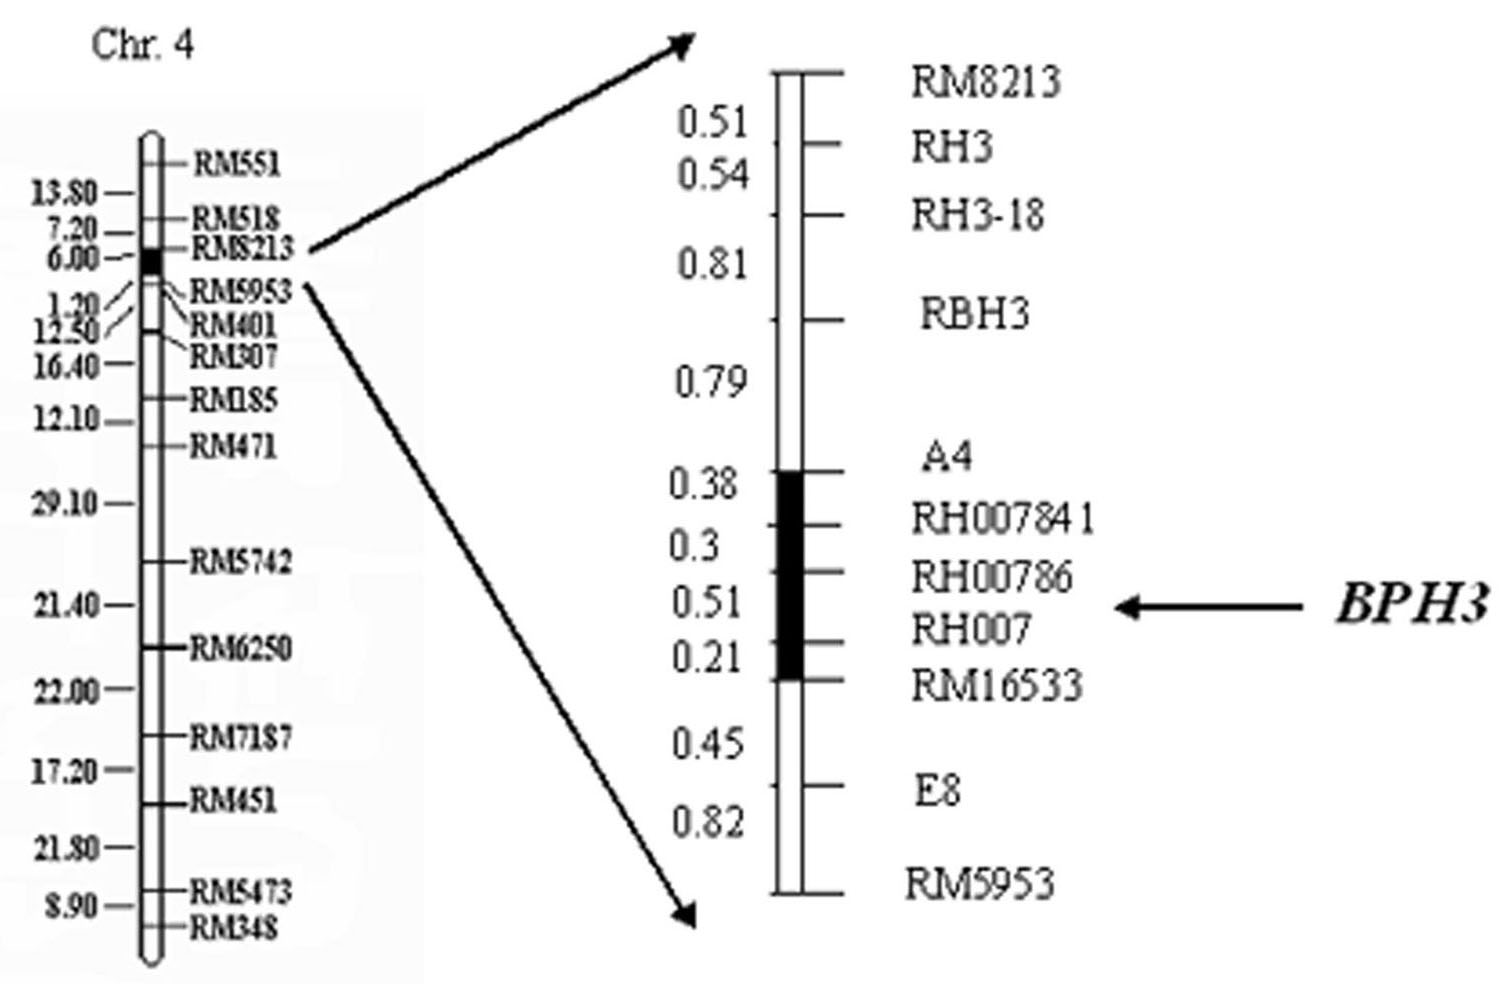 Molecular marker of anti-nilaparvata-lugens major gene Bph3 of rice